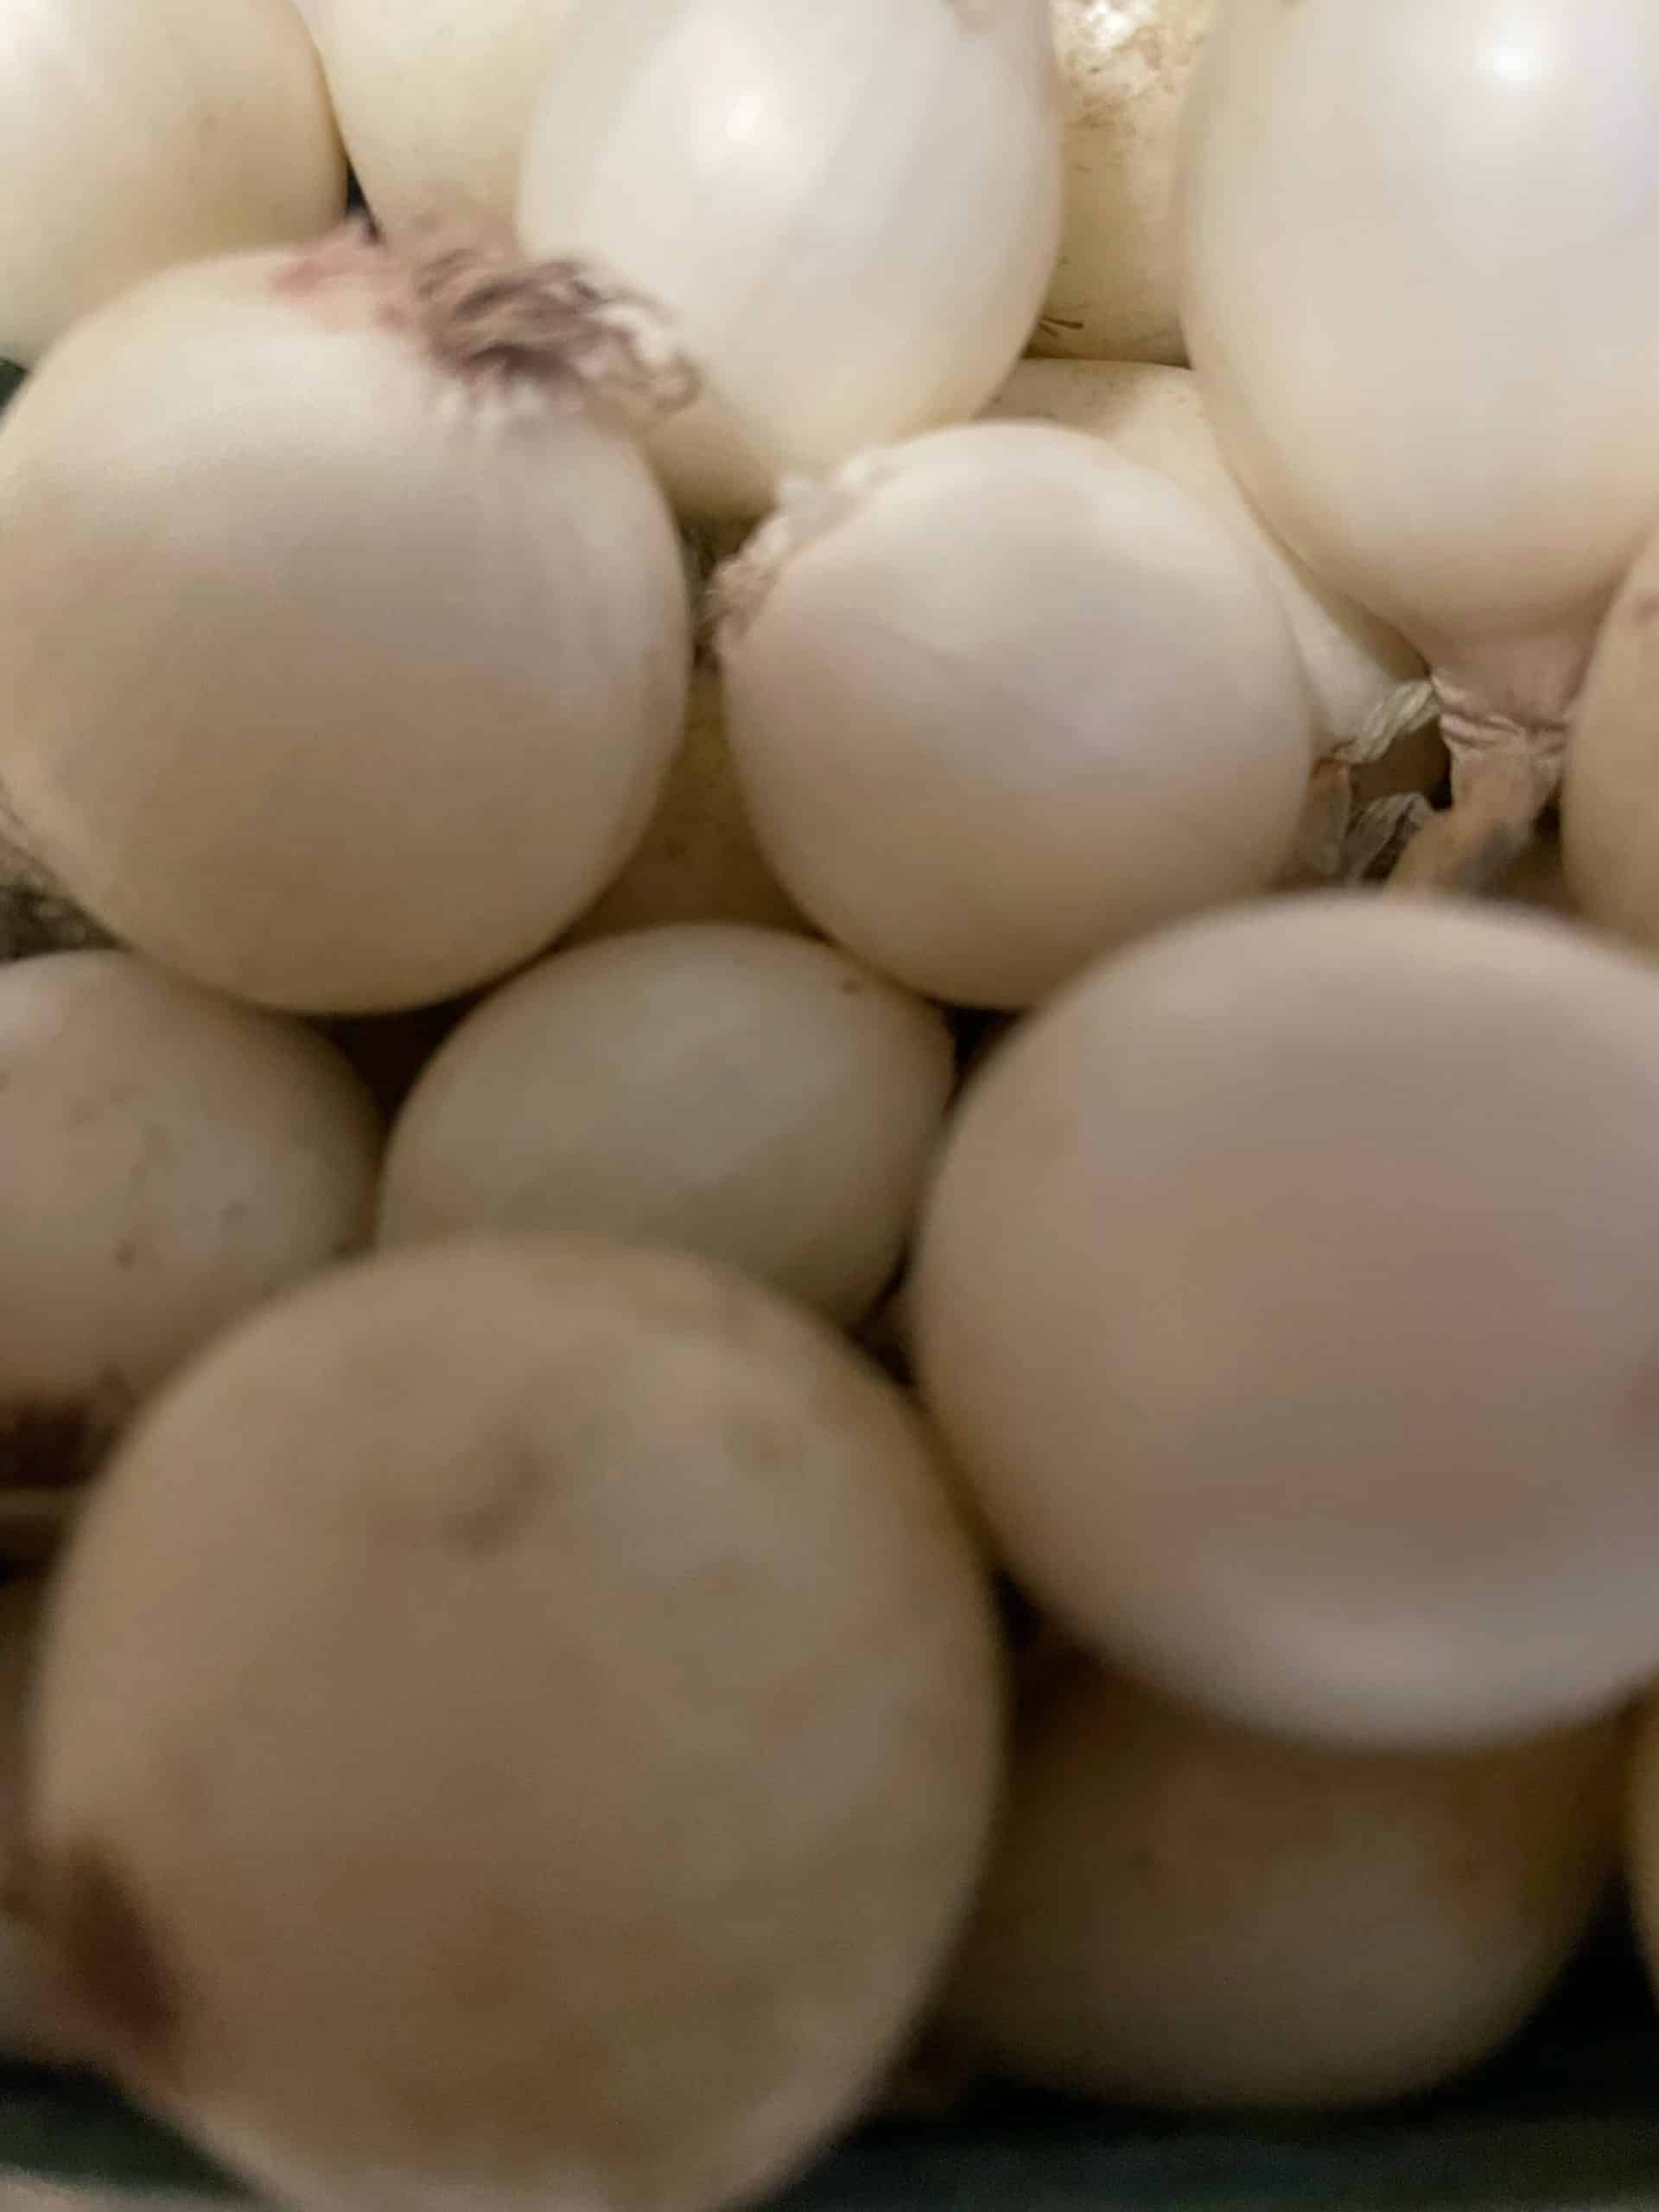 Pearl onions